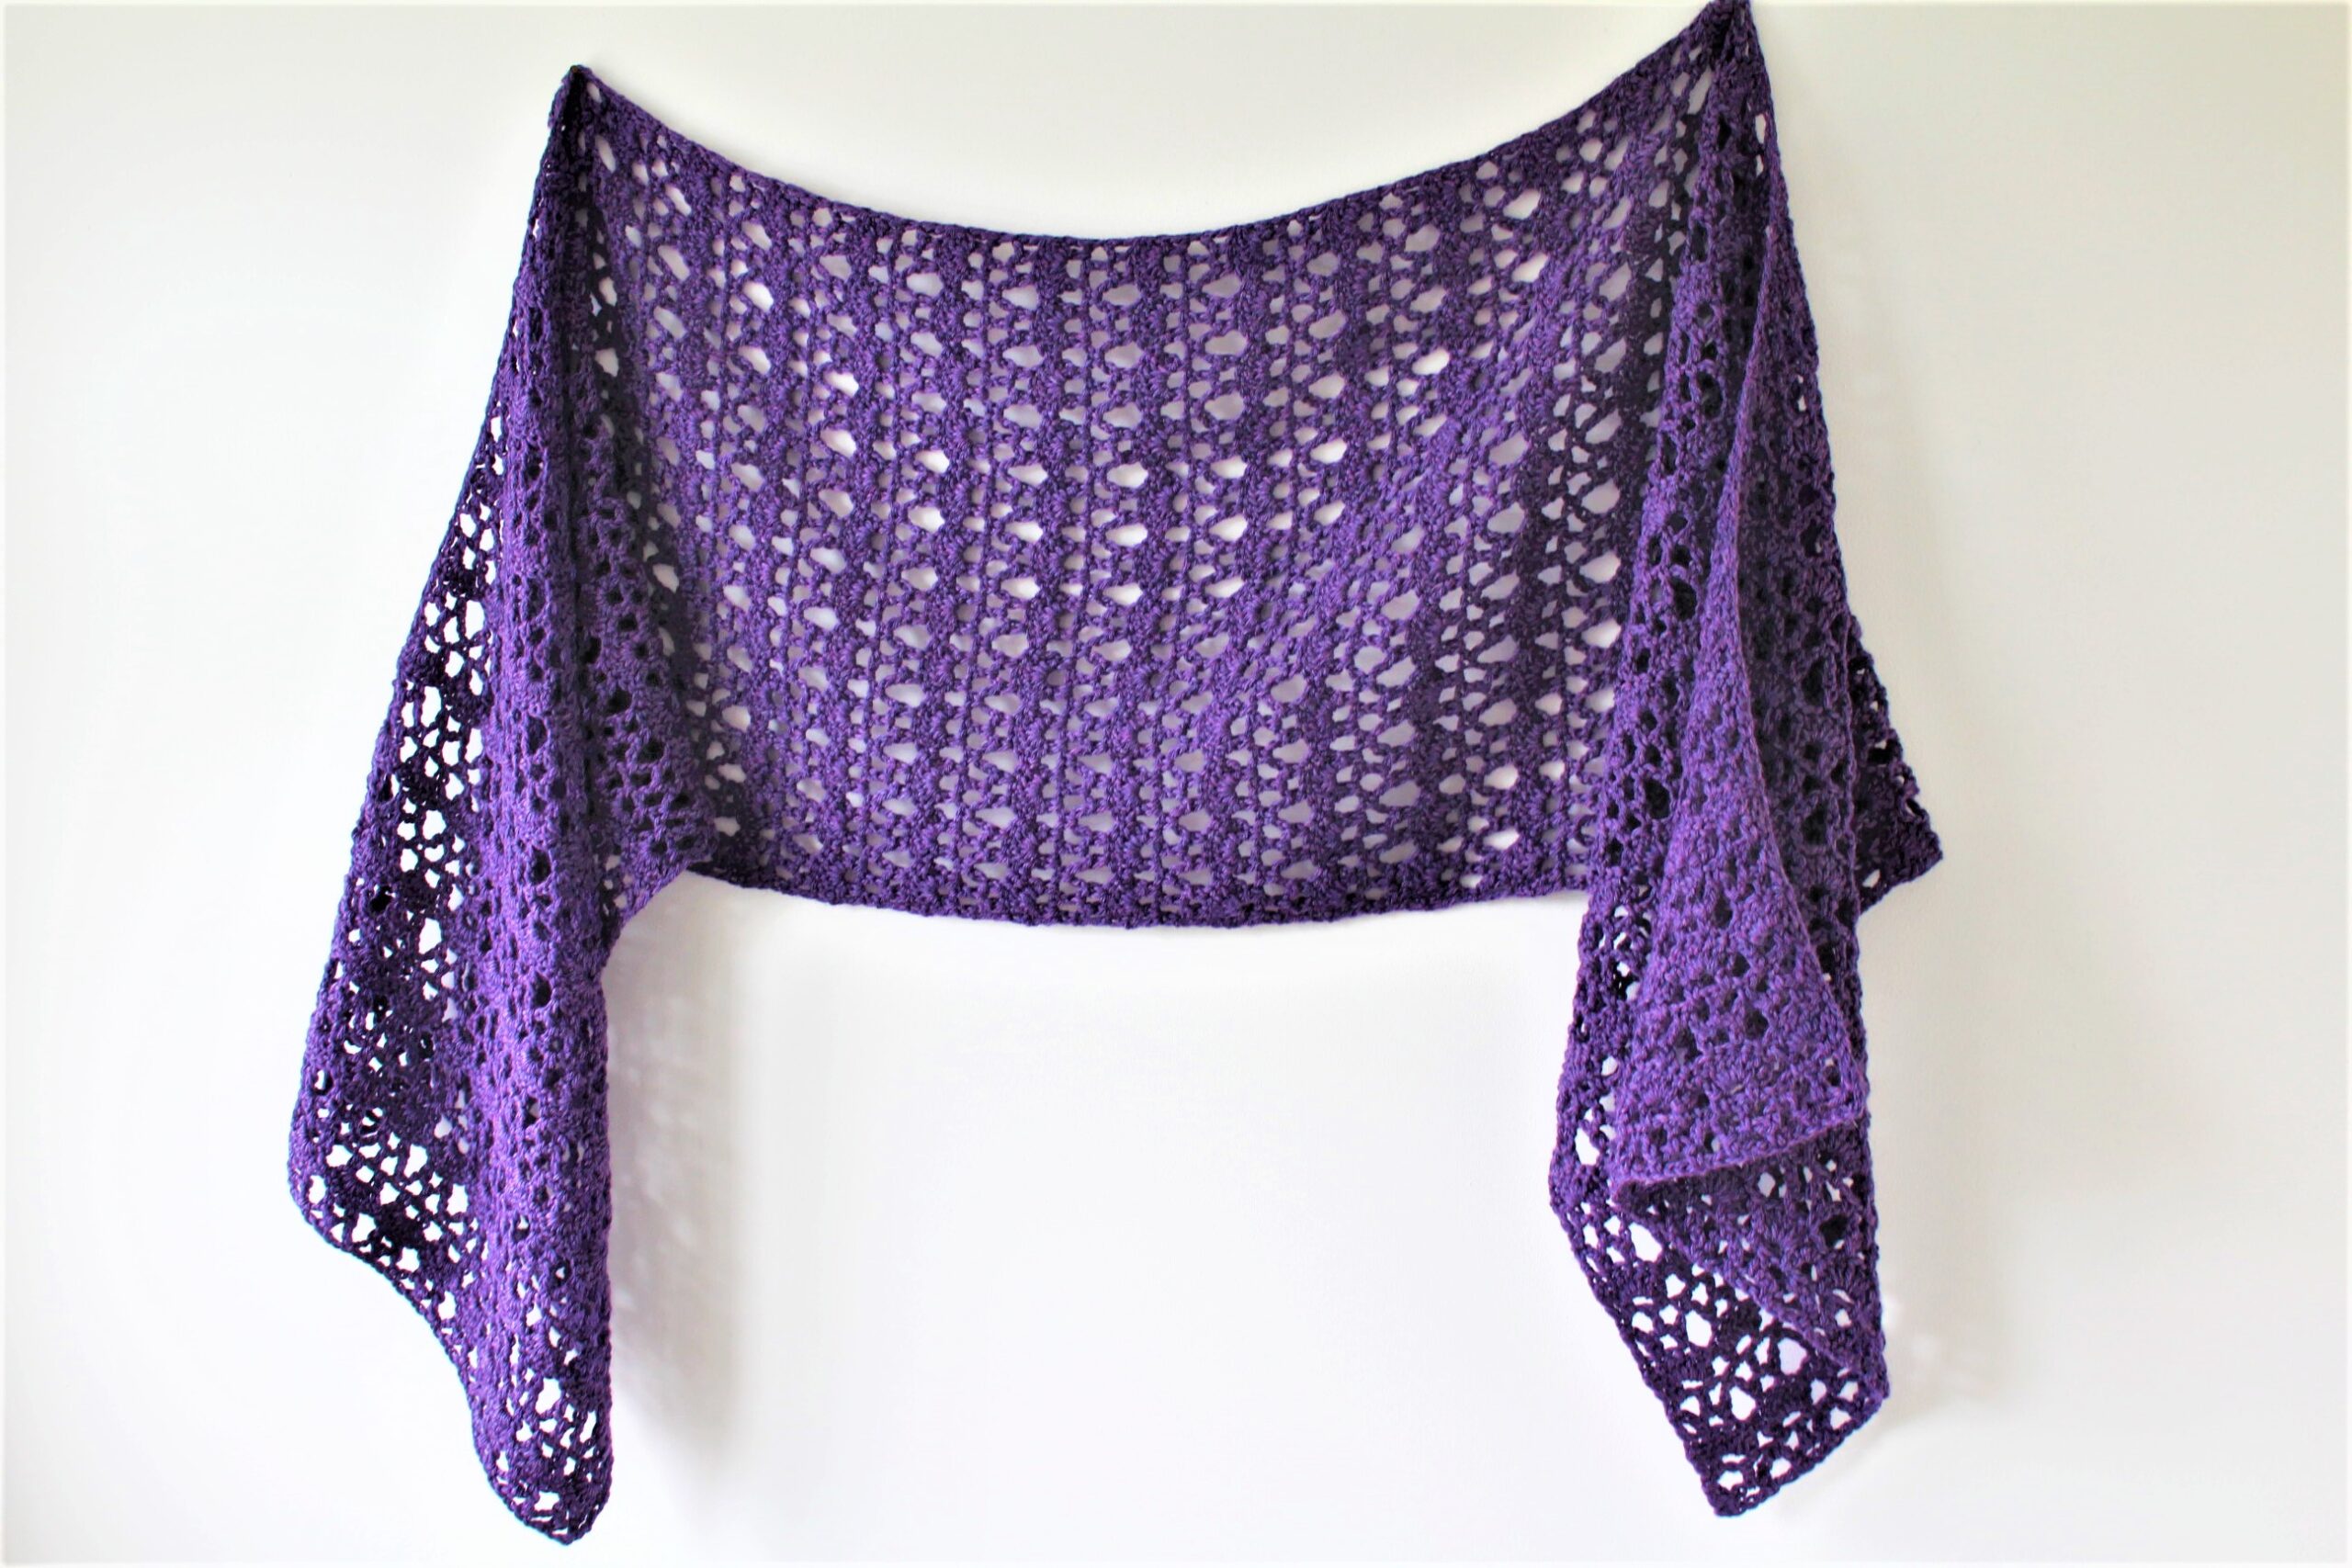 Main image of the Alice Shawl - Free crochet pattern